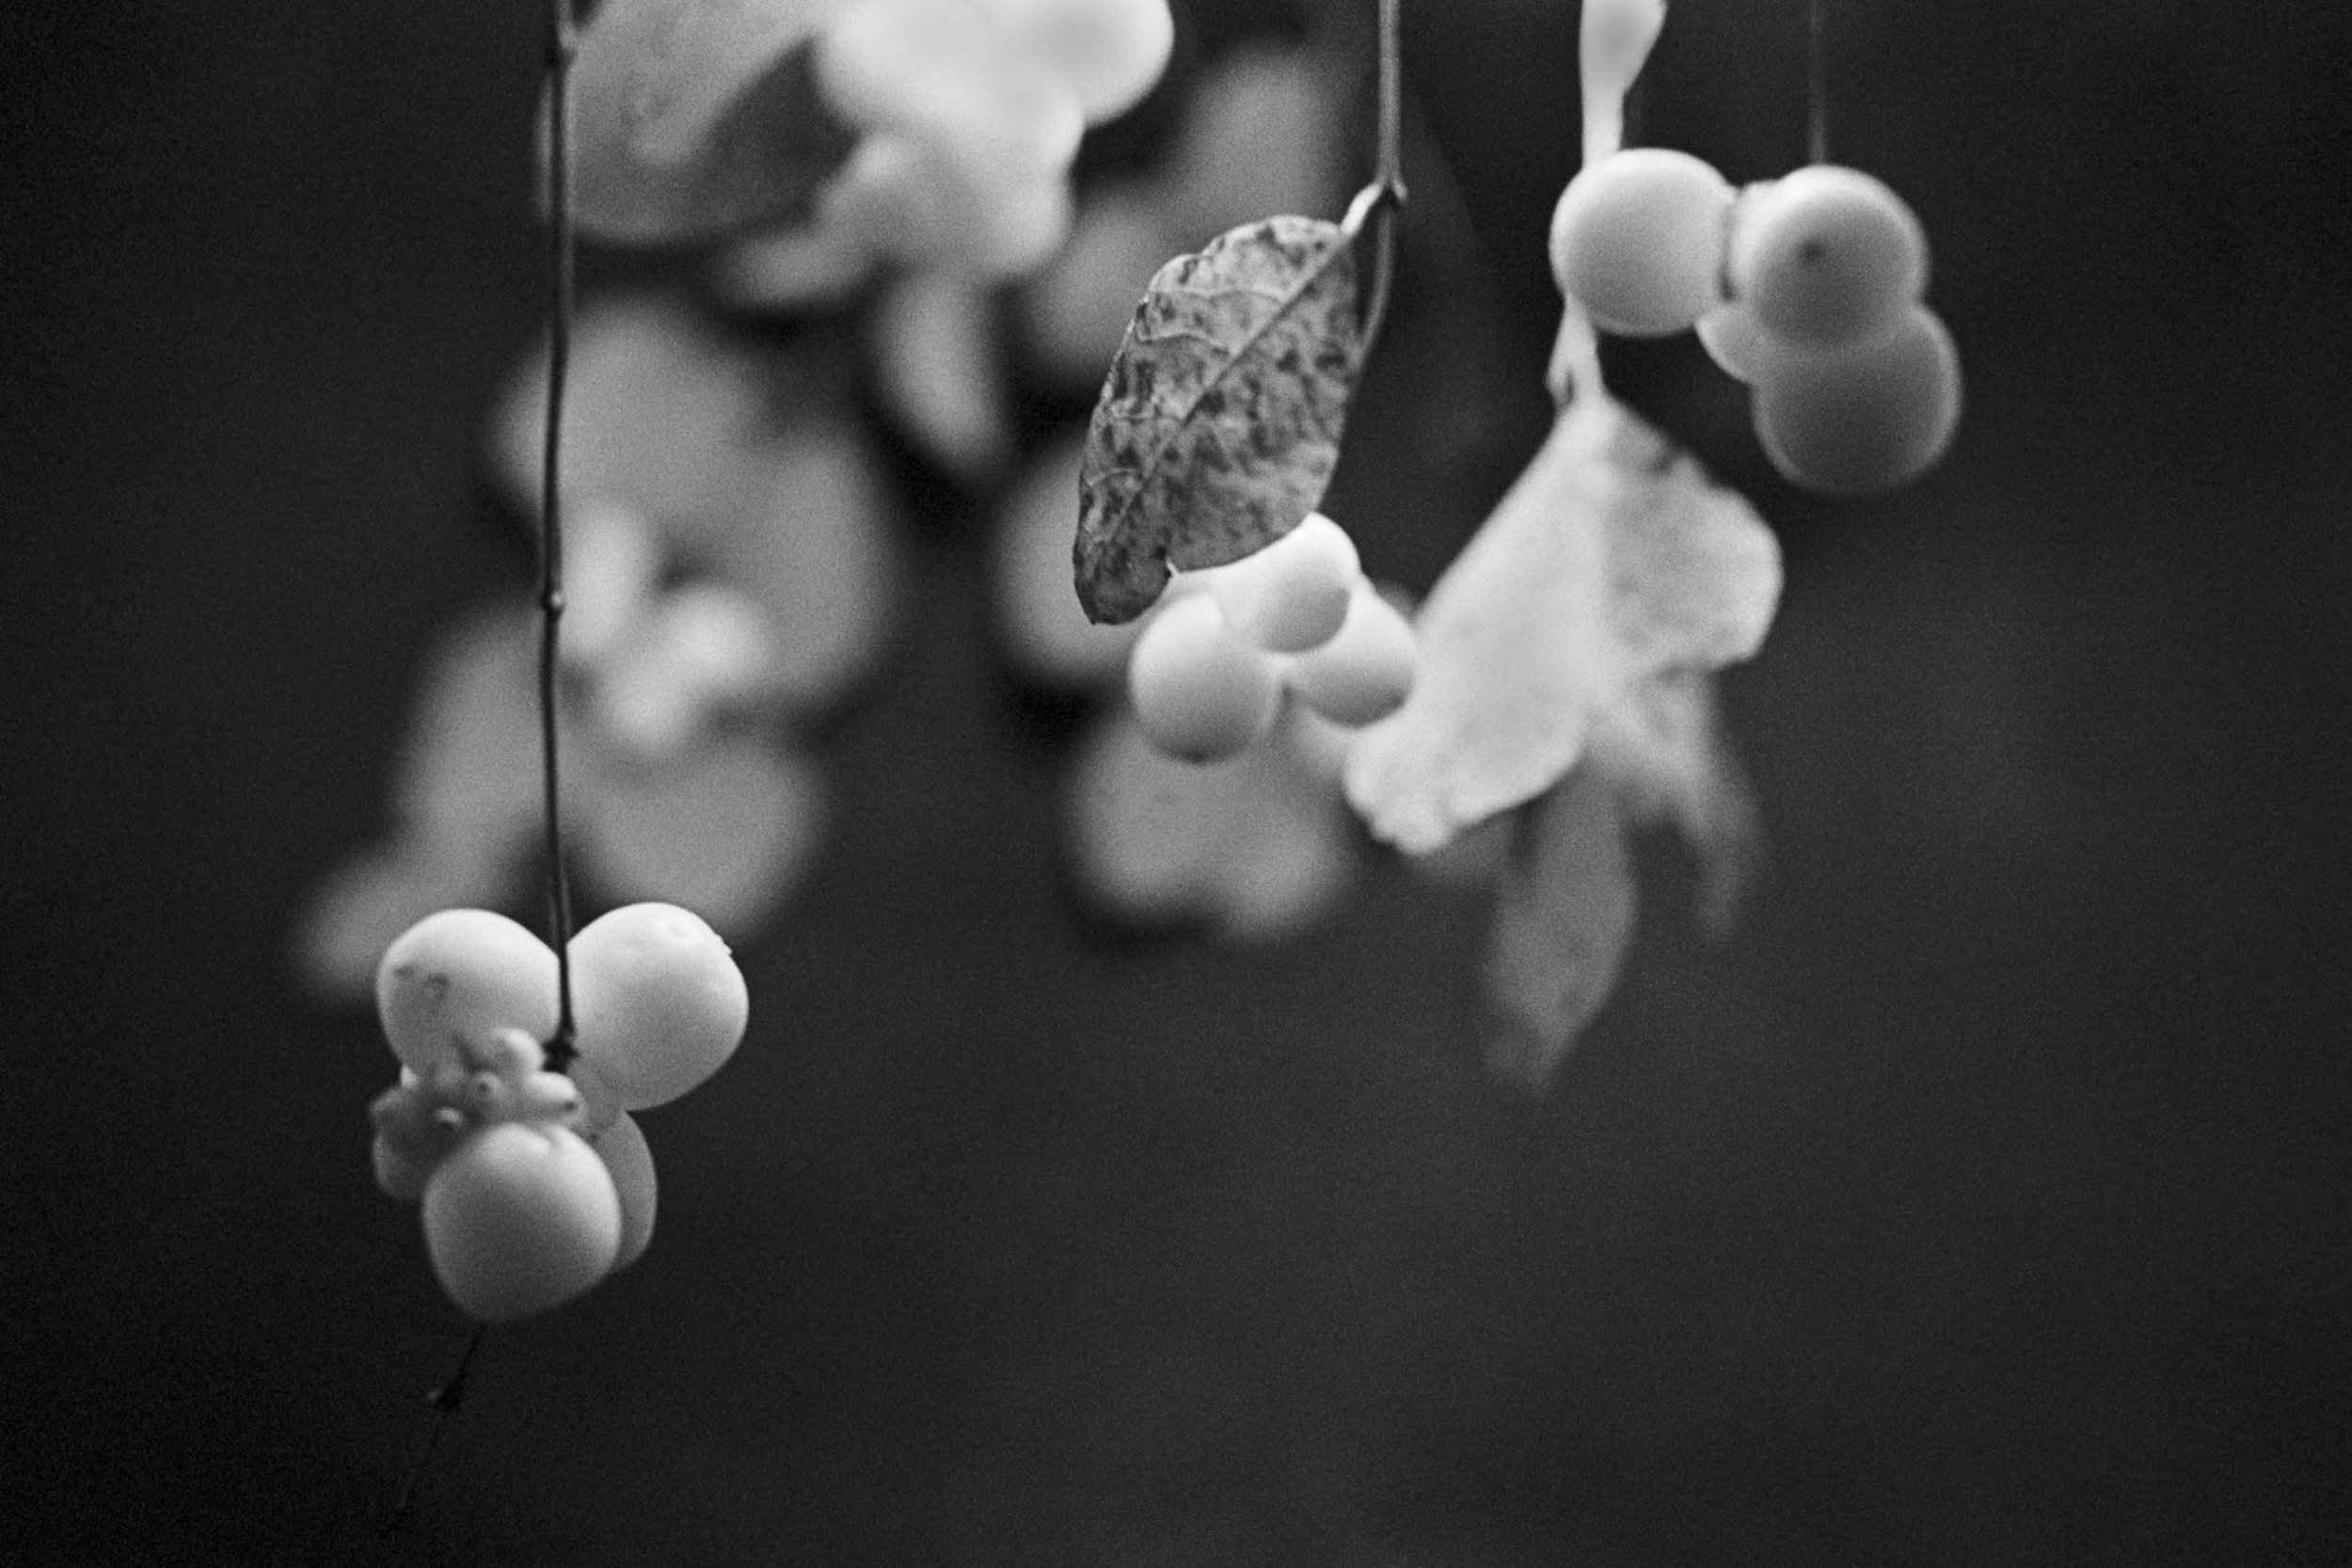  Snowberries, 2014 